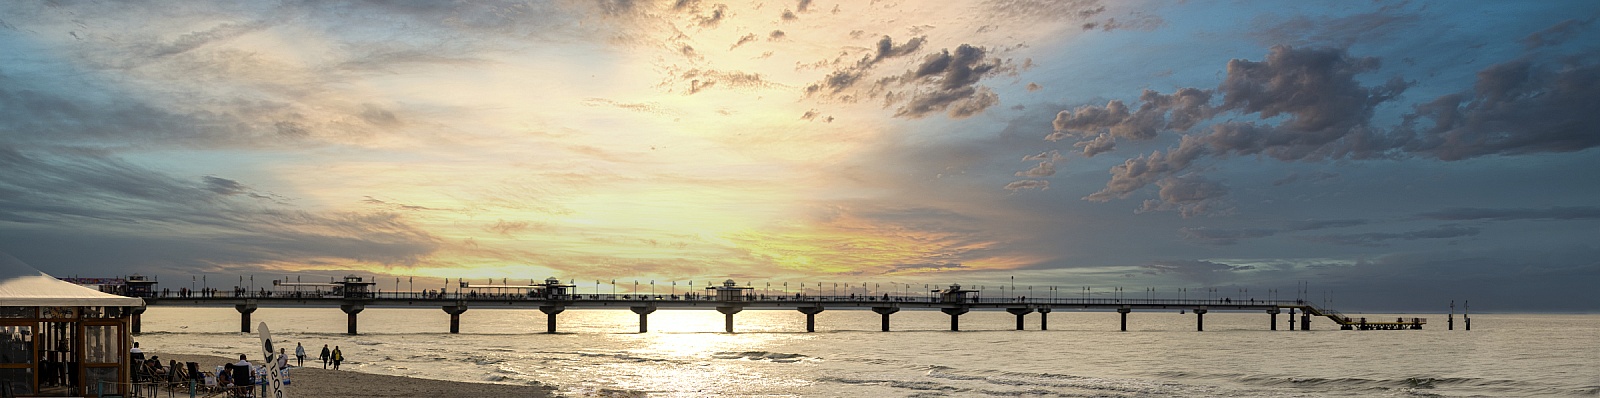 Seebrücke von Miedzyzdroje im  Sonnenuntergang - Panorama